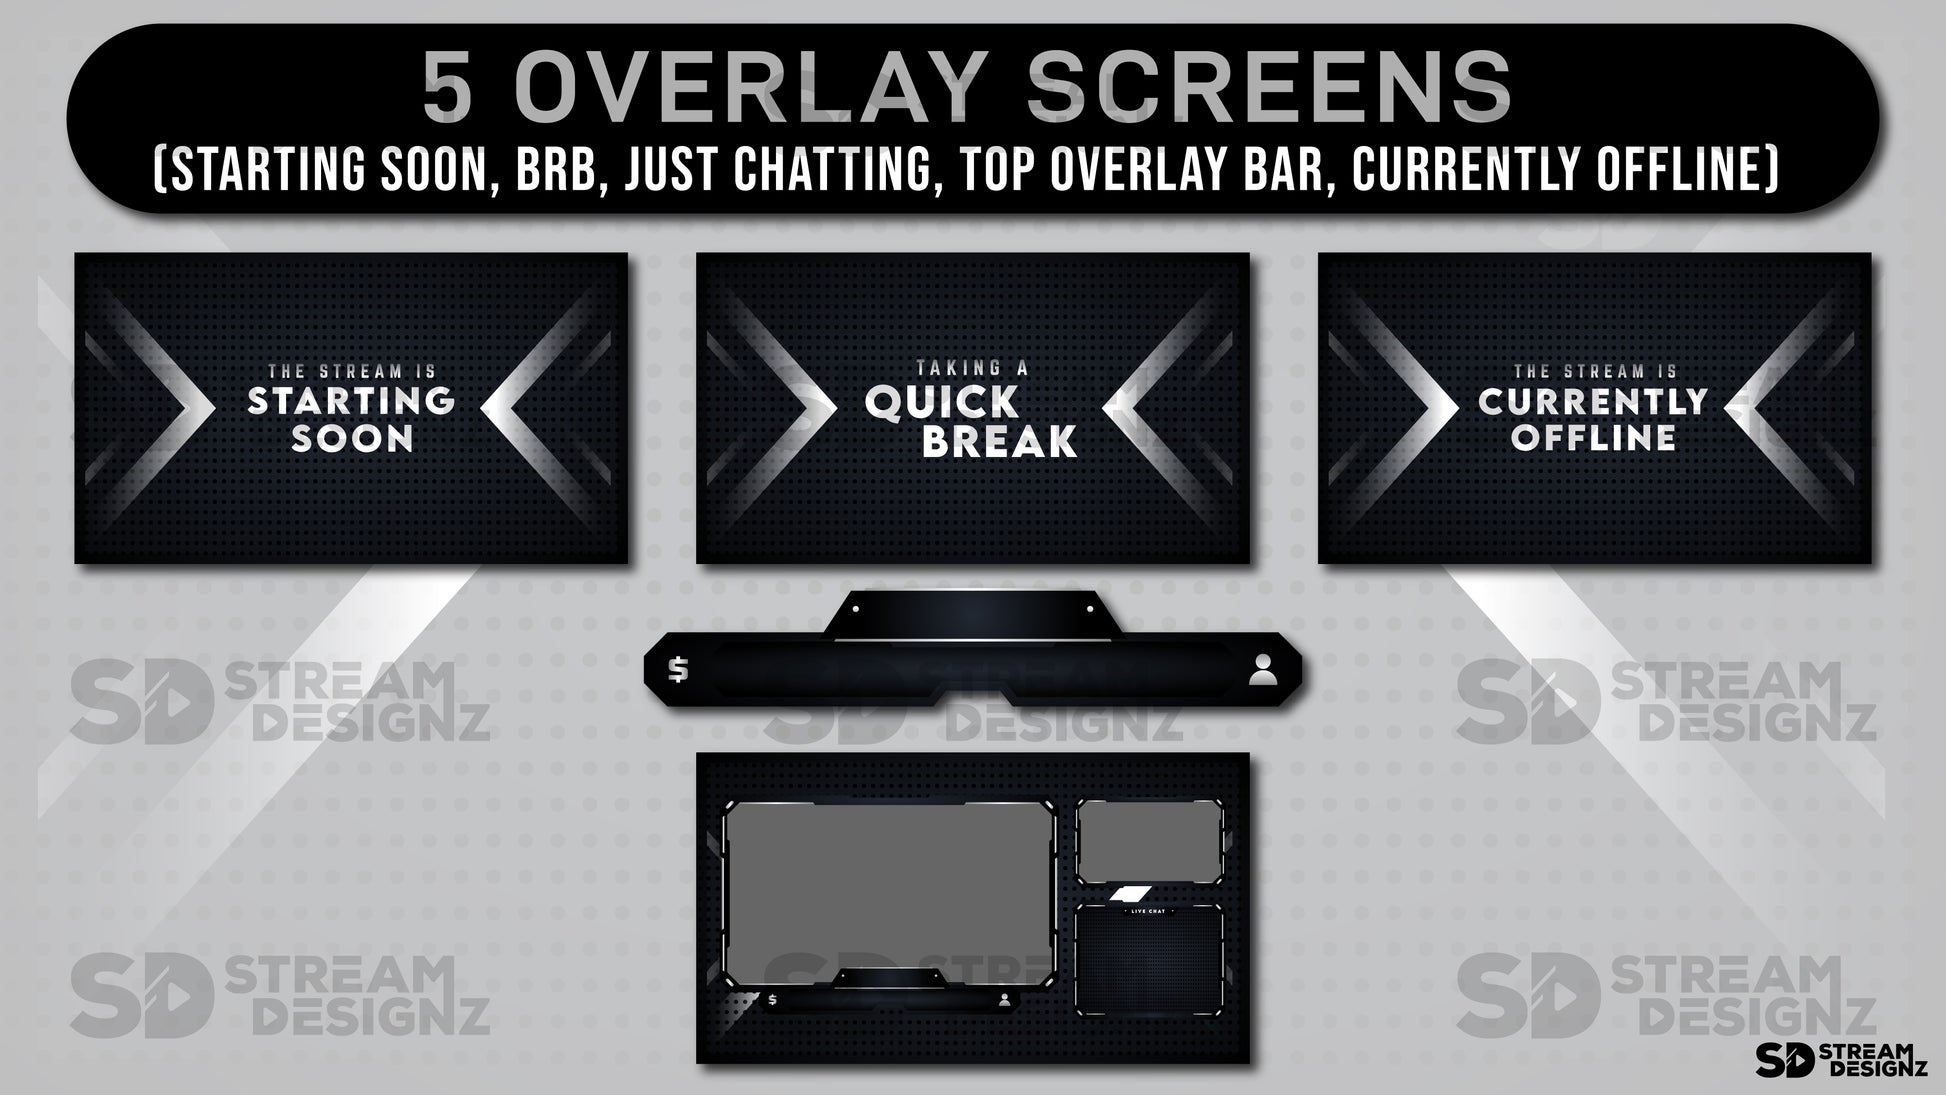 animated stream overlay package monochrome overlay screens stream designz